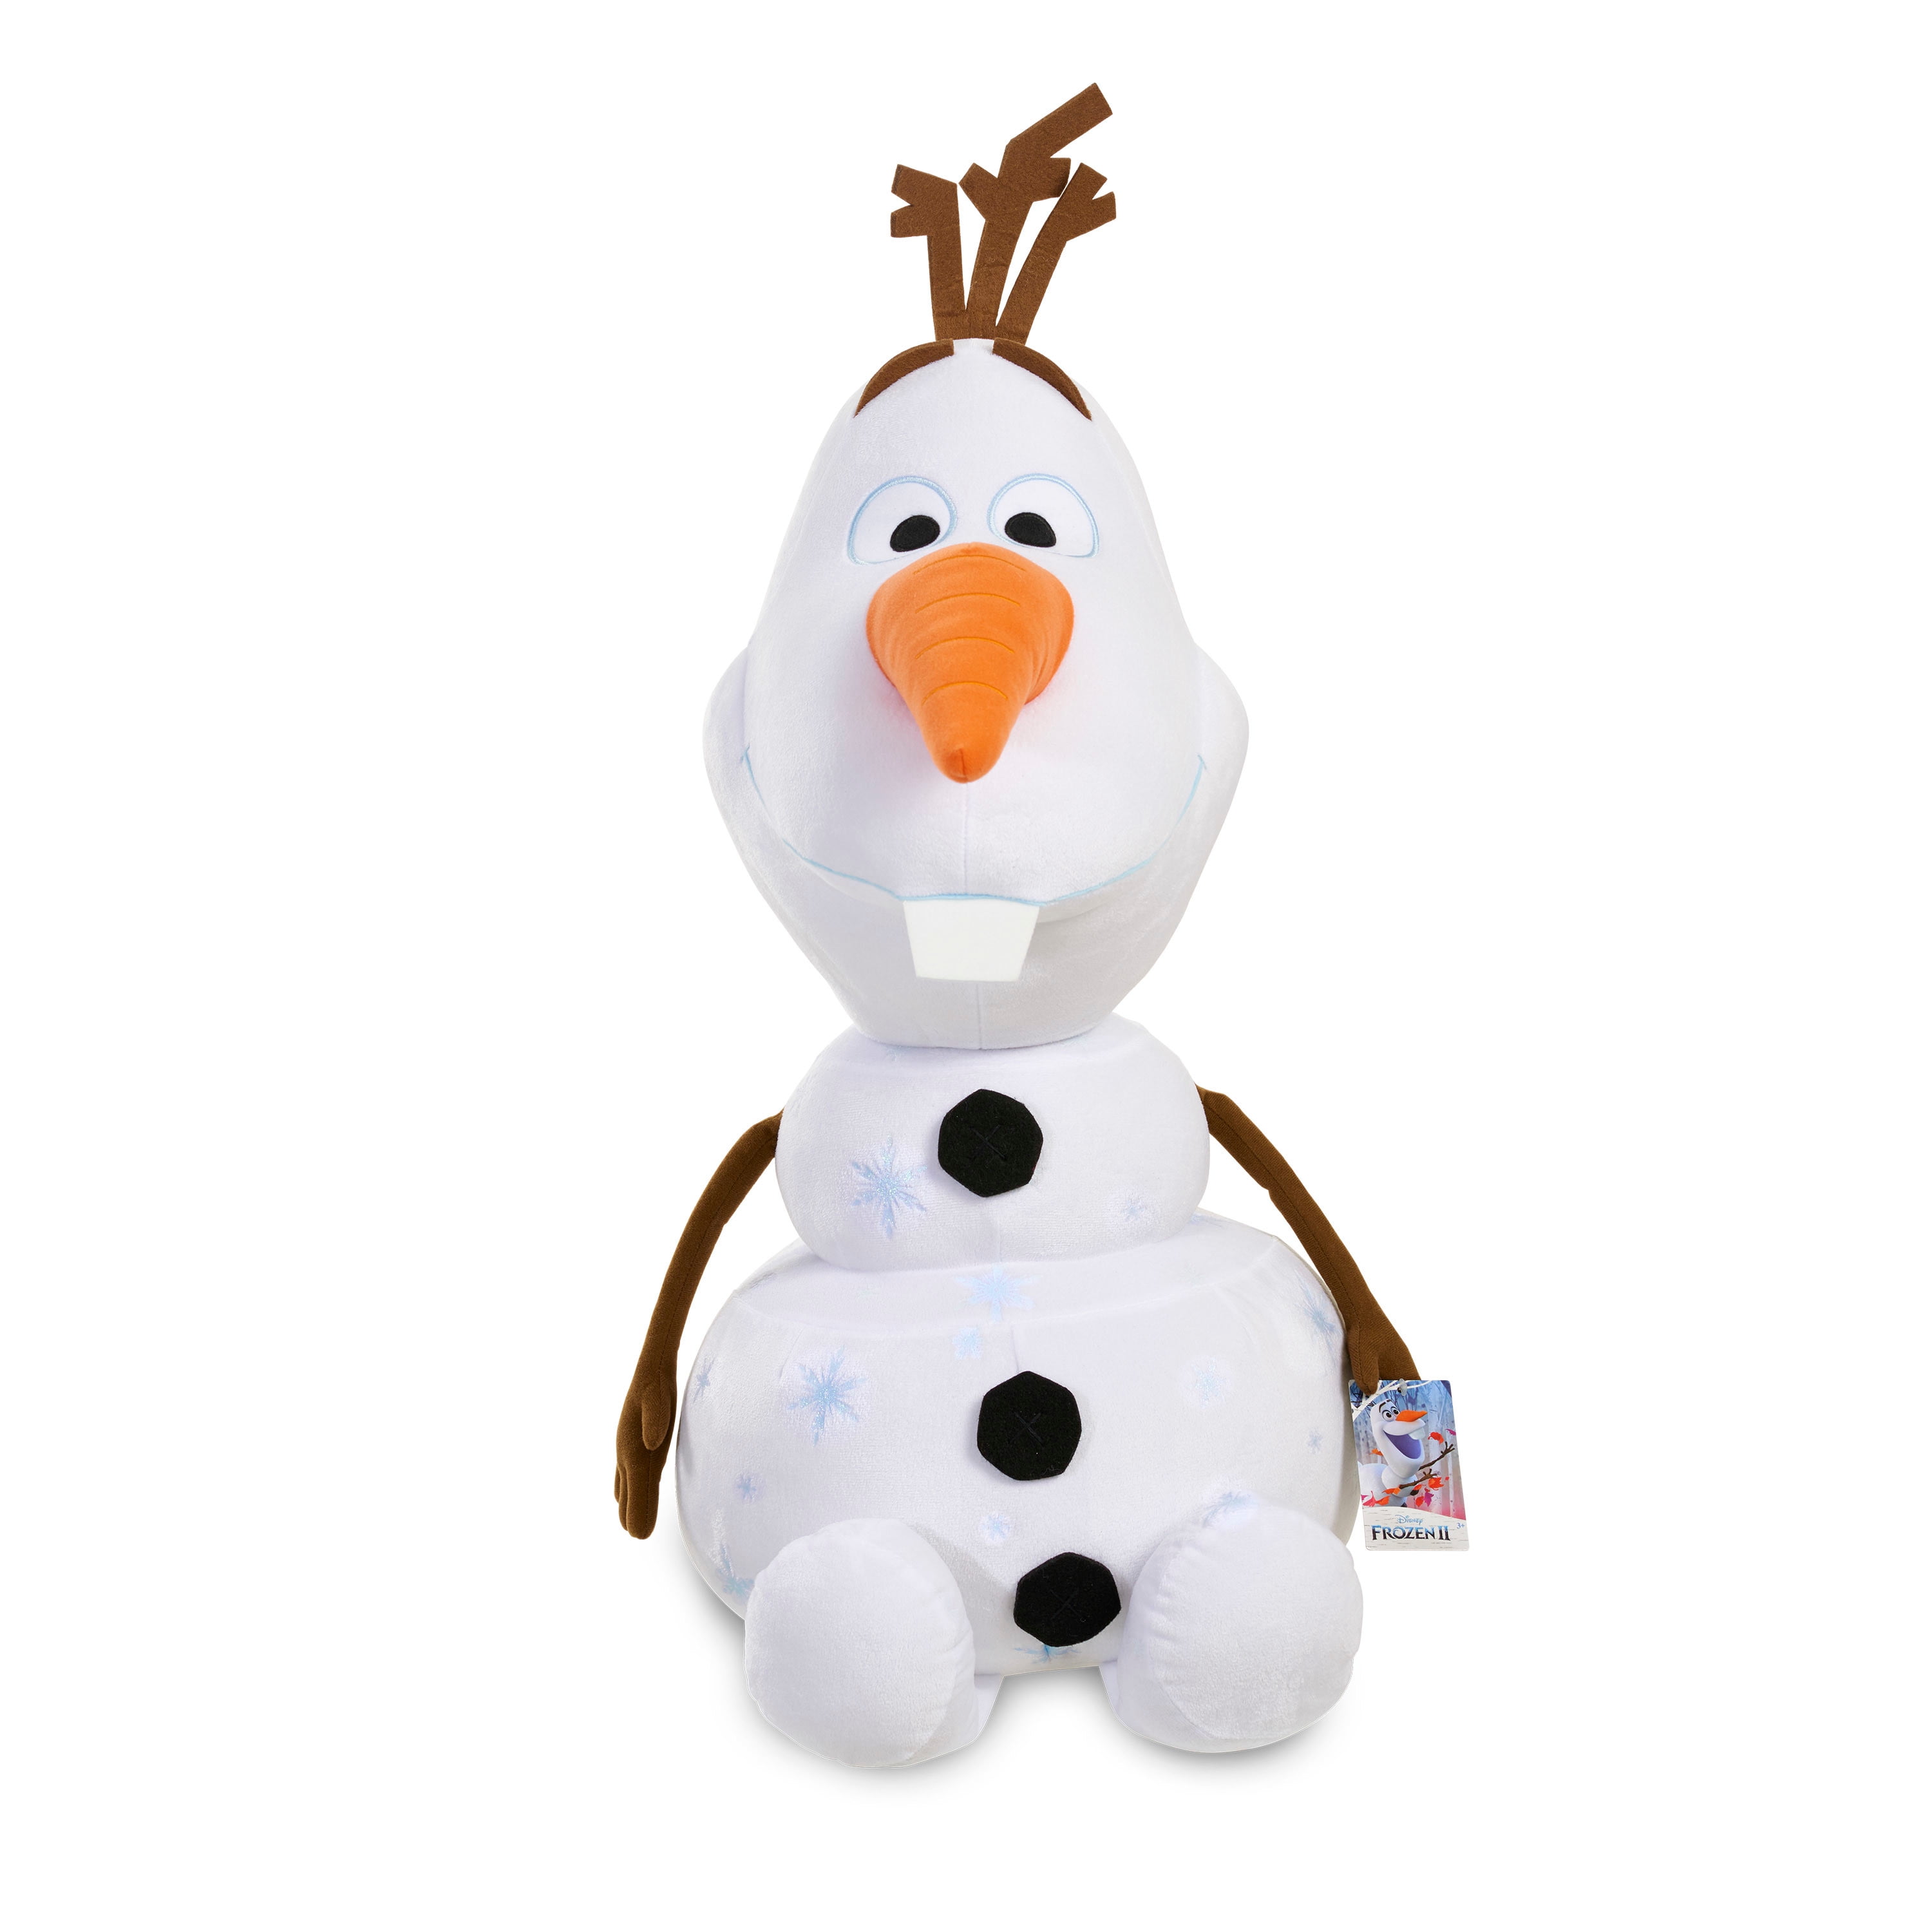 Disney Frozen 2 II Movie Olaf Plush Doll Figure Snowman Snowflakes 2019 12" for sale online 